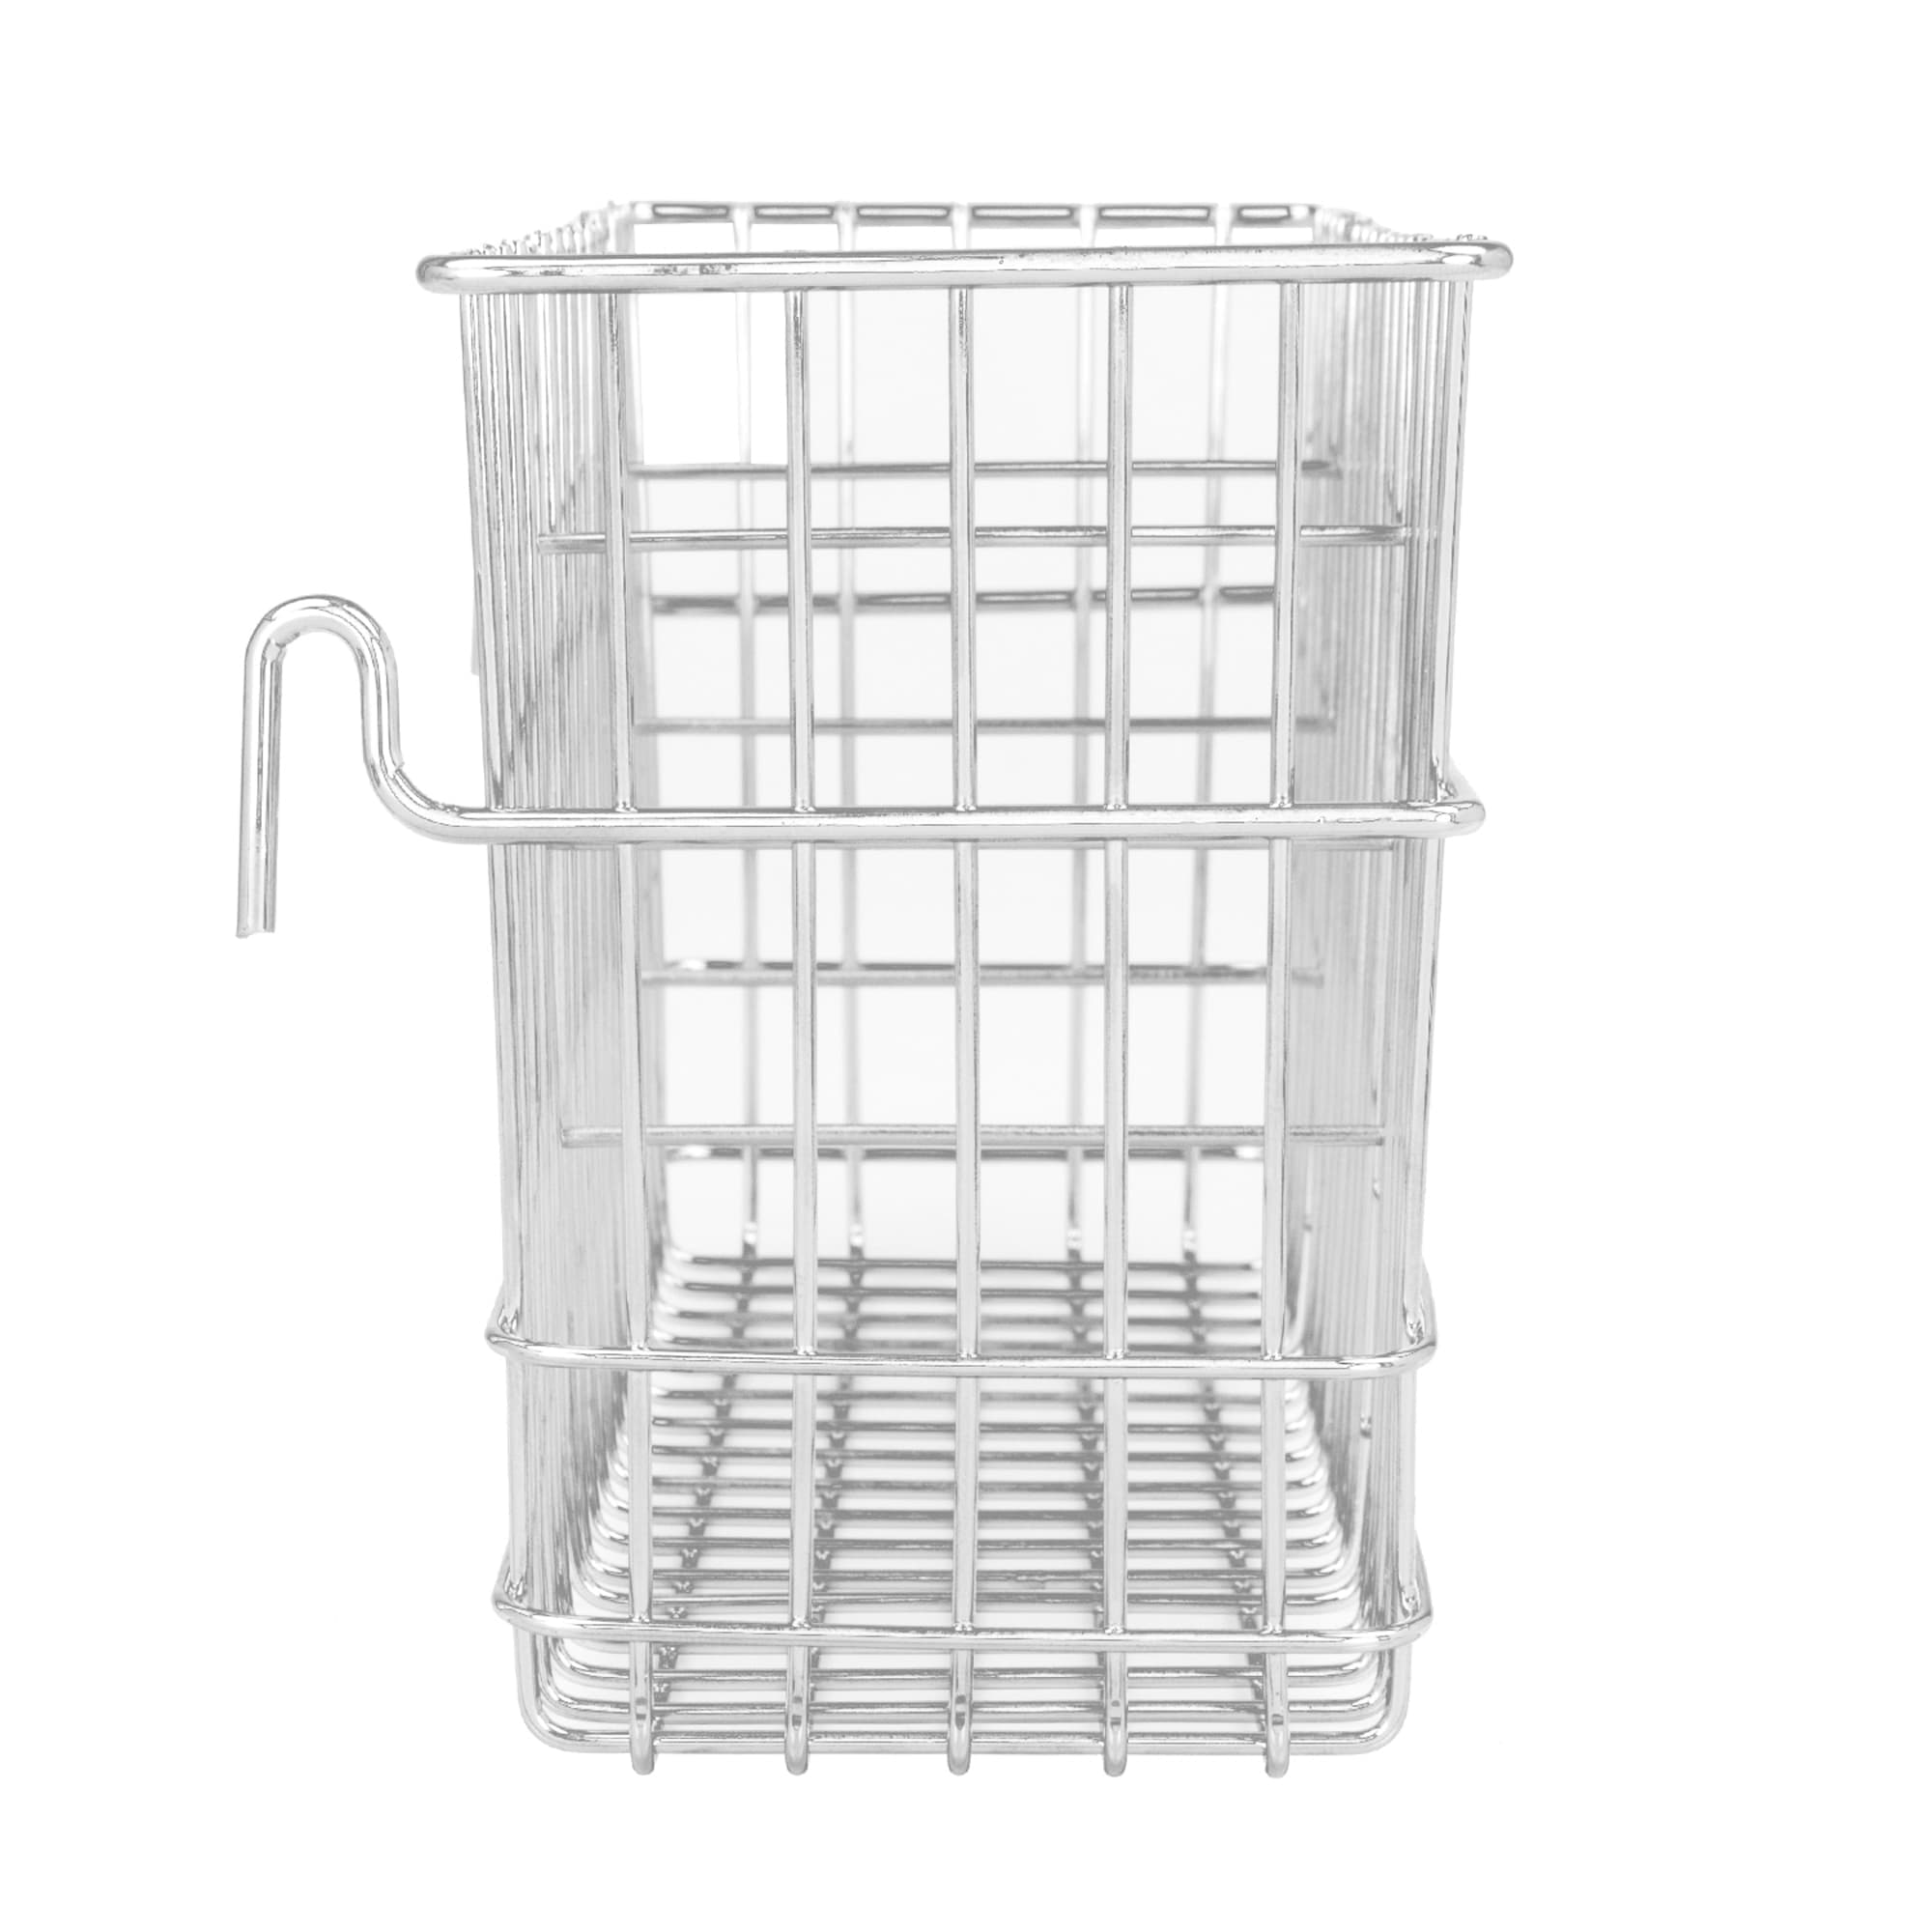 Home Basics 3 Slot Hanging Chrome Plated Steel Cutlery Drying Rack Basket Holder $3.00 EACH, CASE PACK OF 24